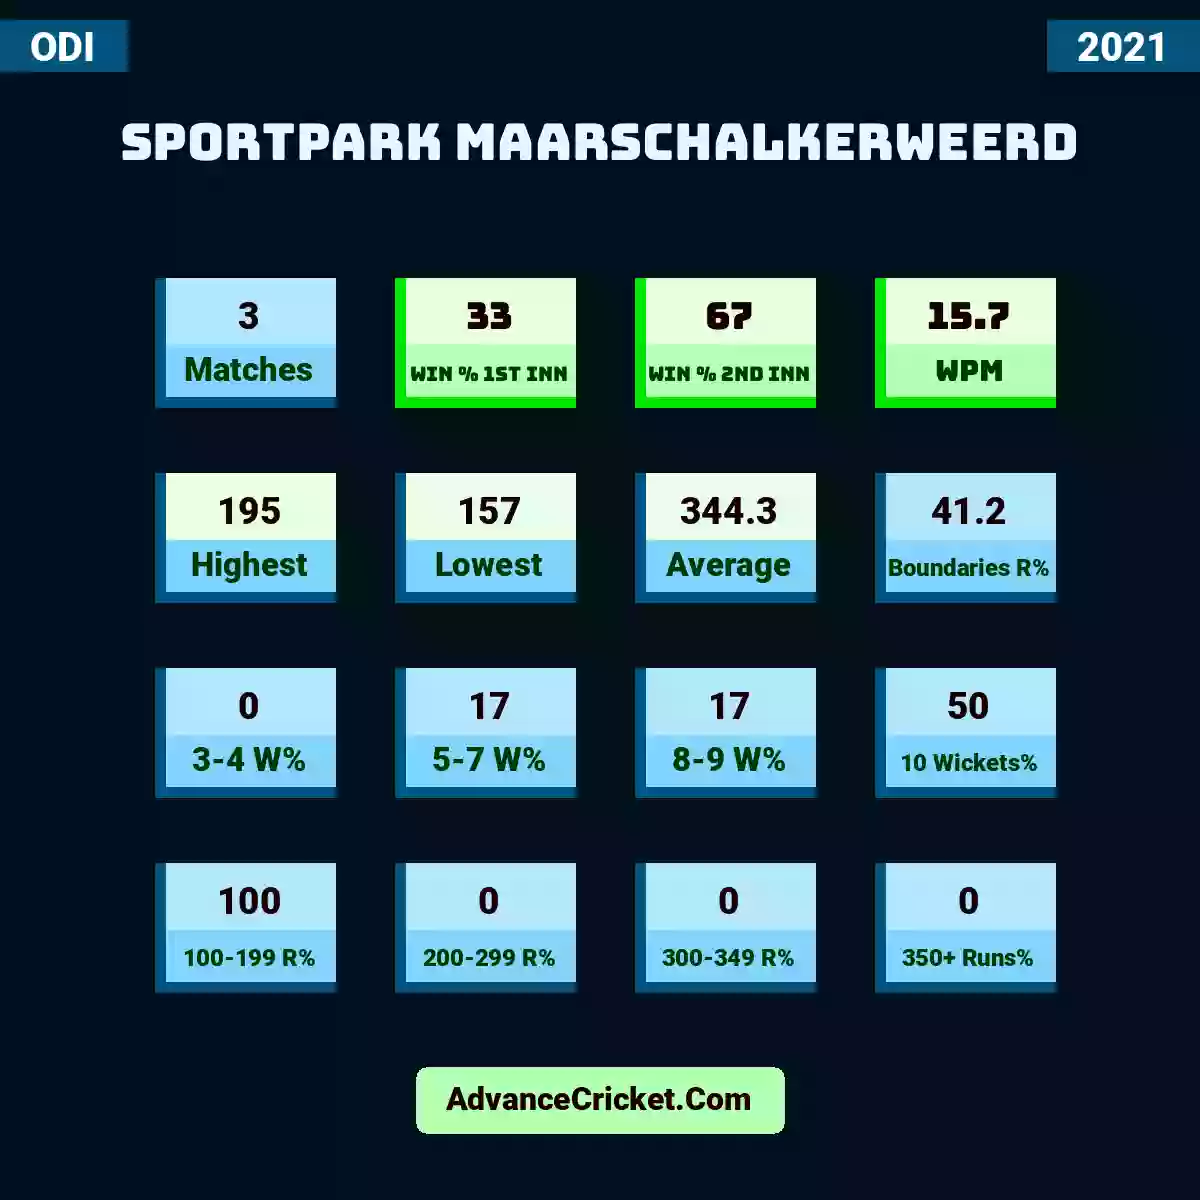 Image showing Sportpark Maarschalkerweerd with Matches: 3, Win % 1st Inn: 33, Win % 2nd Inn: 67, WPM: 15.7, Highest: 195, Lowest: 157, Average: 344.3, Boundaries R%: 41.2, 3-4 W%: 0, 5-7 W%: 17, 8-9 W%: 17, 10 Wickets%: 50, 100-199 R%: 100, 200-299 R%: 0, 300-349 R%: 0, 350+ Runs%: 0.